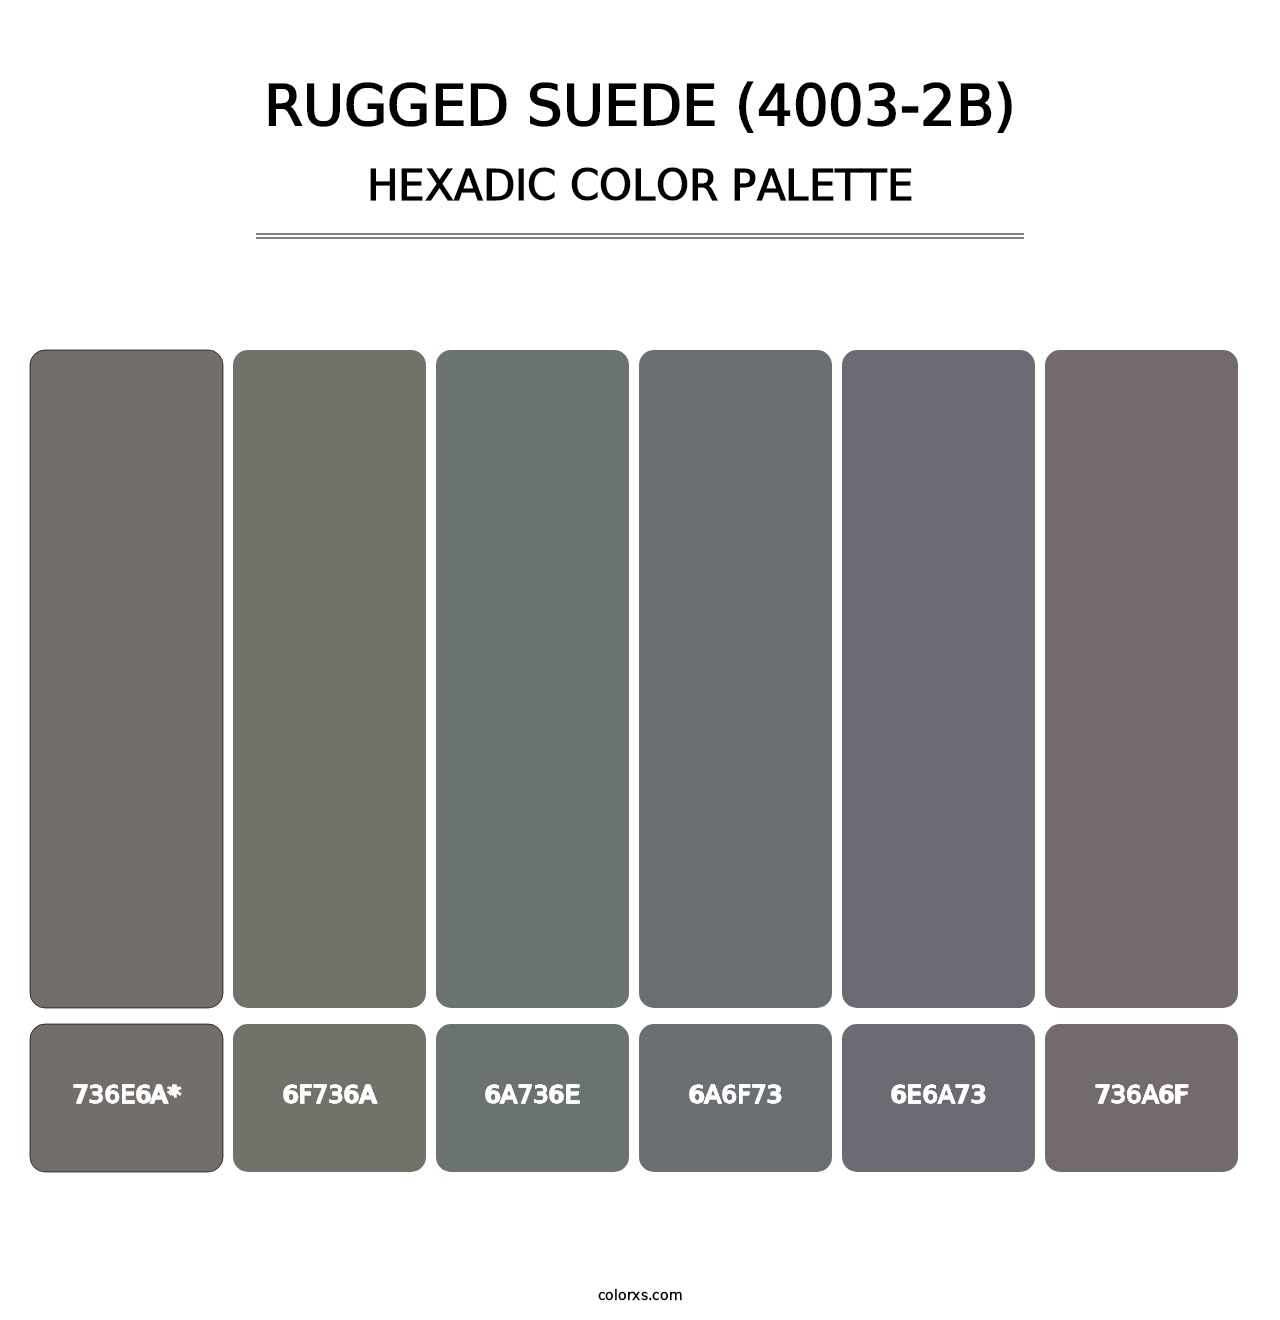 Rugged Suede (4003-2B) - Hexadic Color Palette